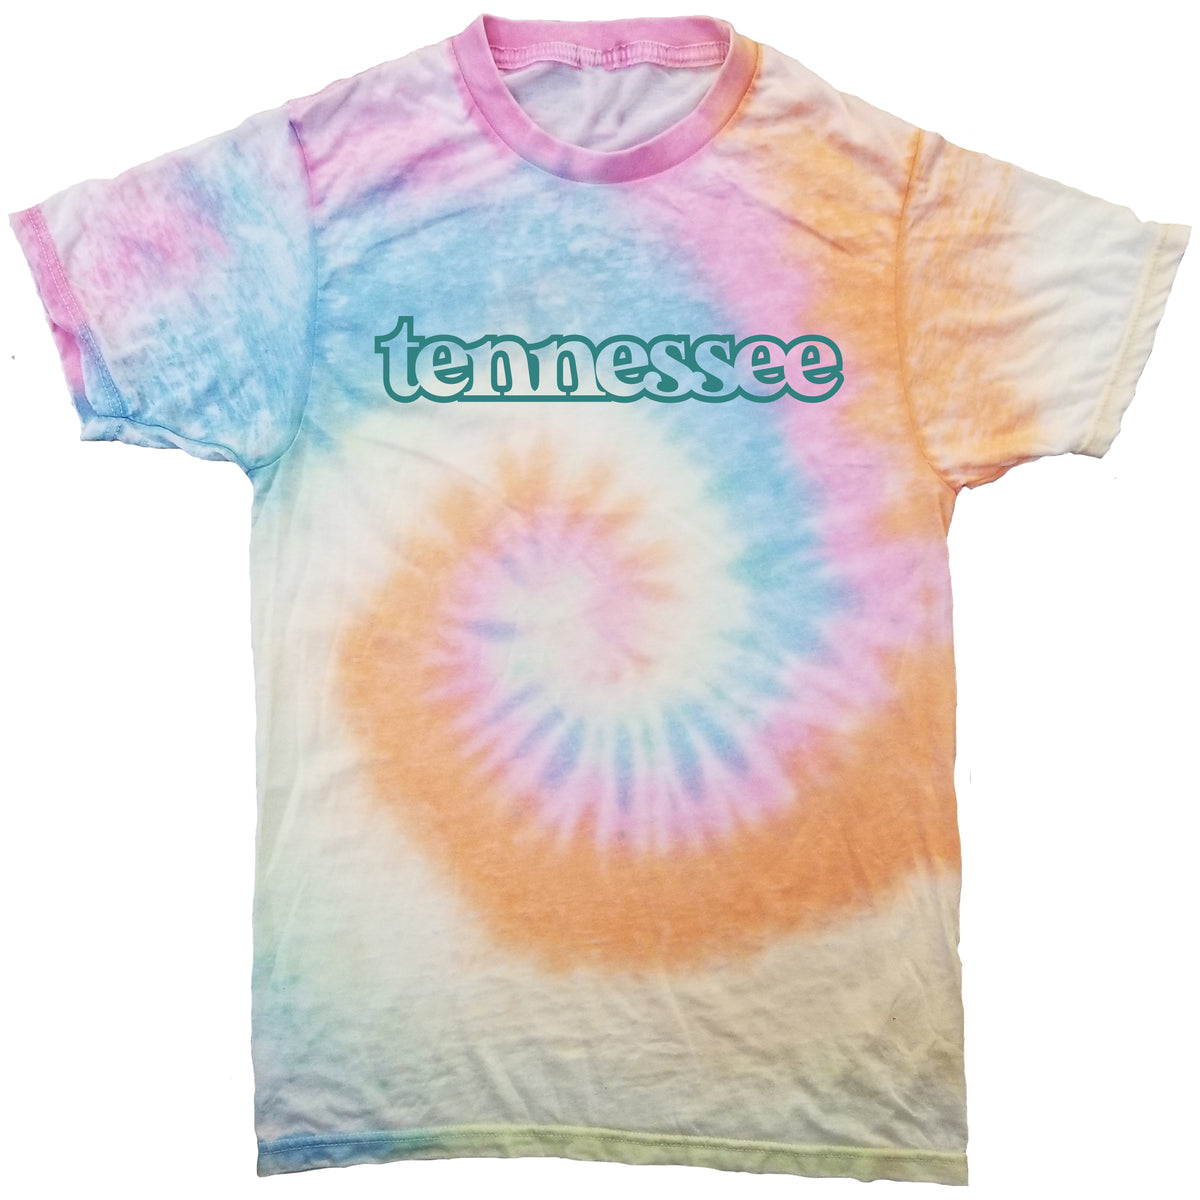 Tennessee Pastel Tie-Dye T-Shirt